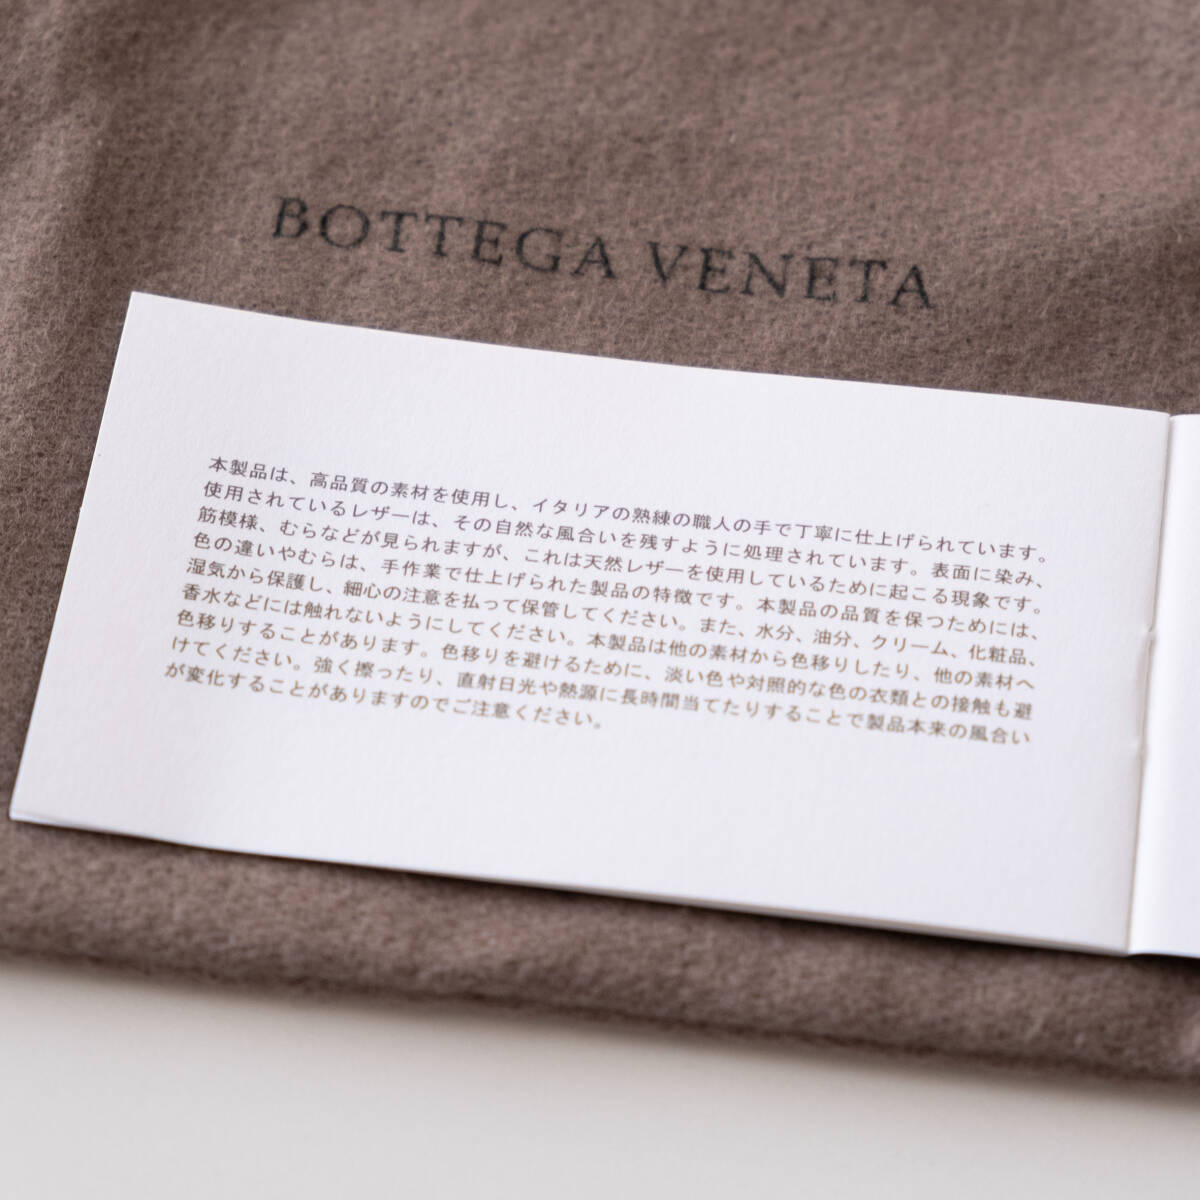 ■BOTTEGA VENETA ボッテガヴェネタ 7.8万円 新品 未使用 イントレチャート 財布 カーフレザー 1点限り■3992_画像6